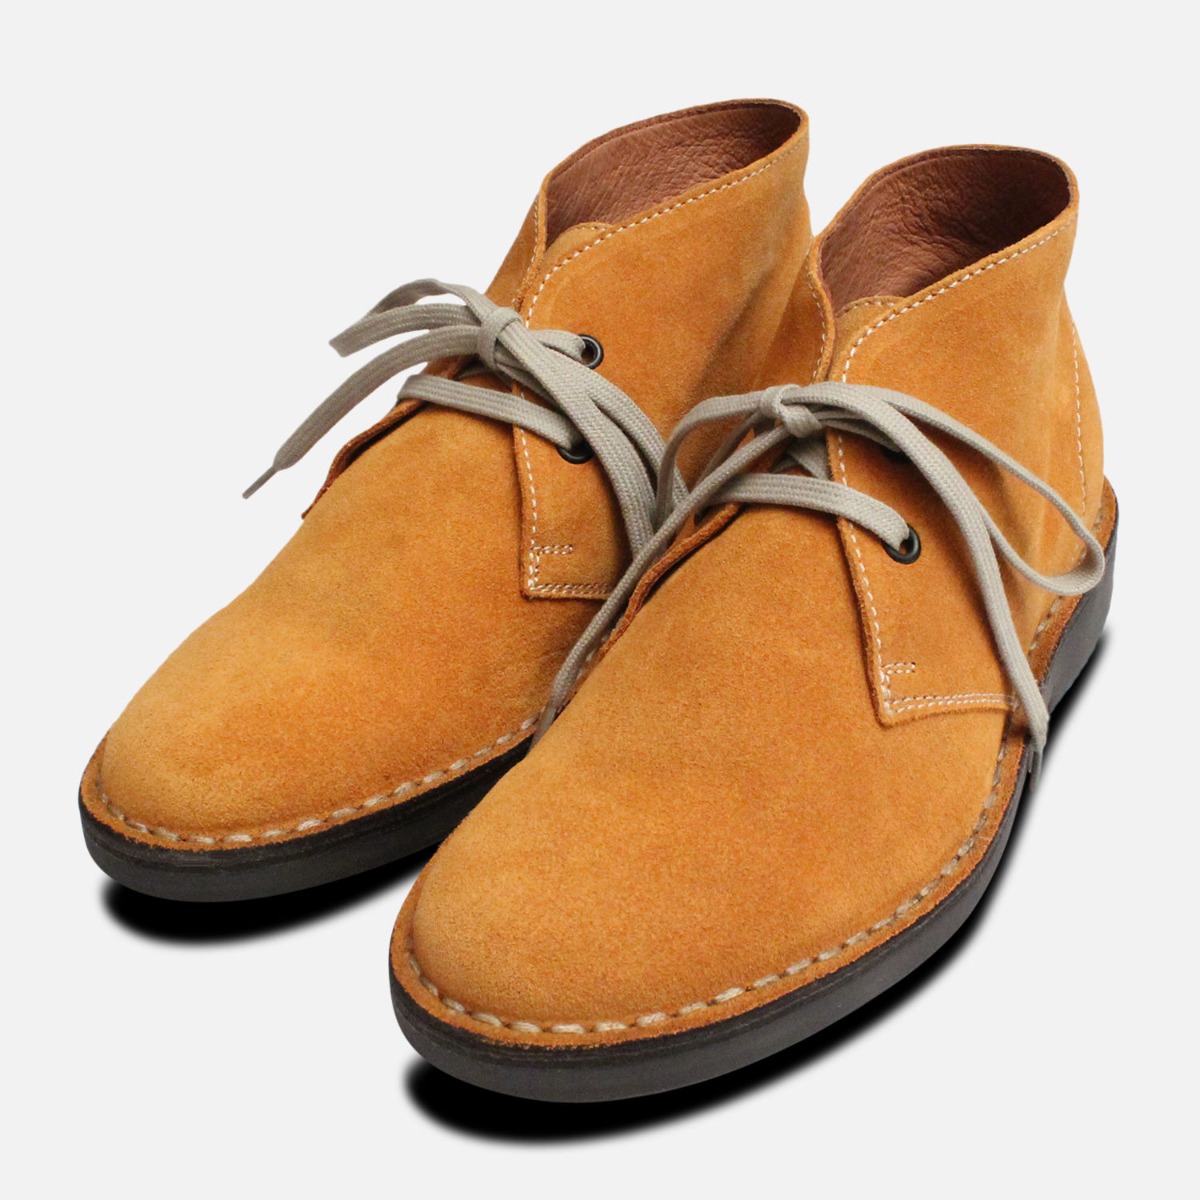 Wheat Yellow Suede Ladies Italian Desert Boots | eBay